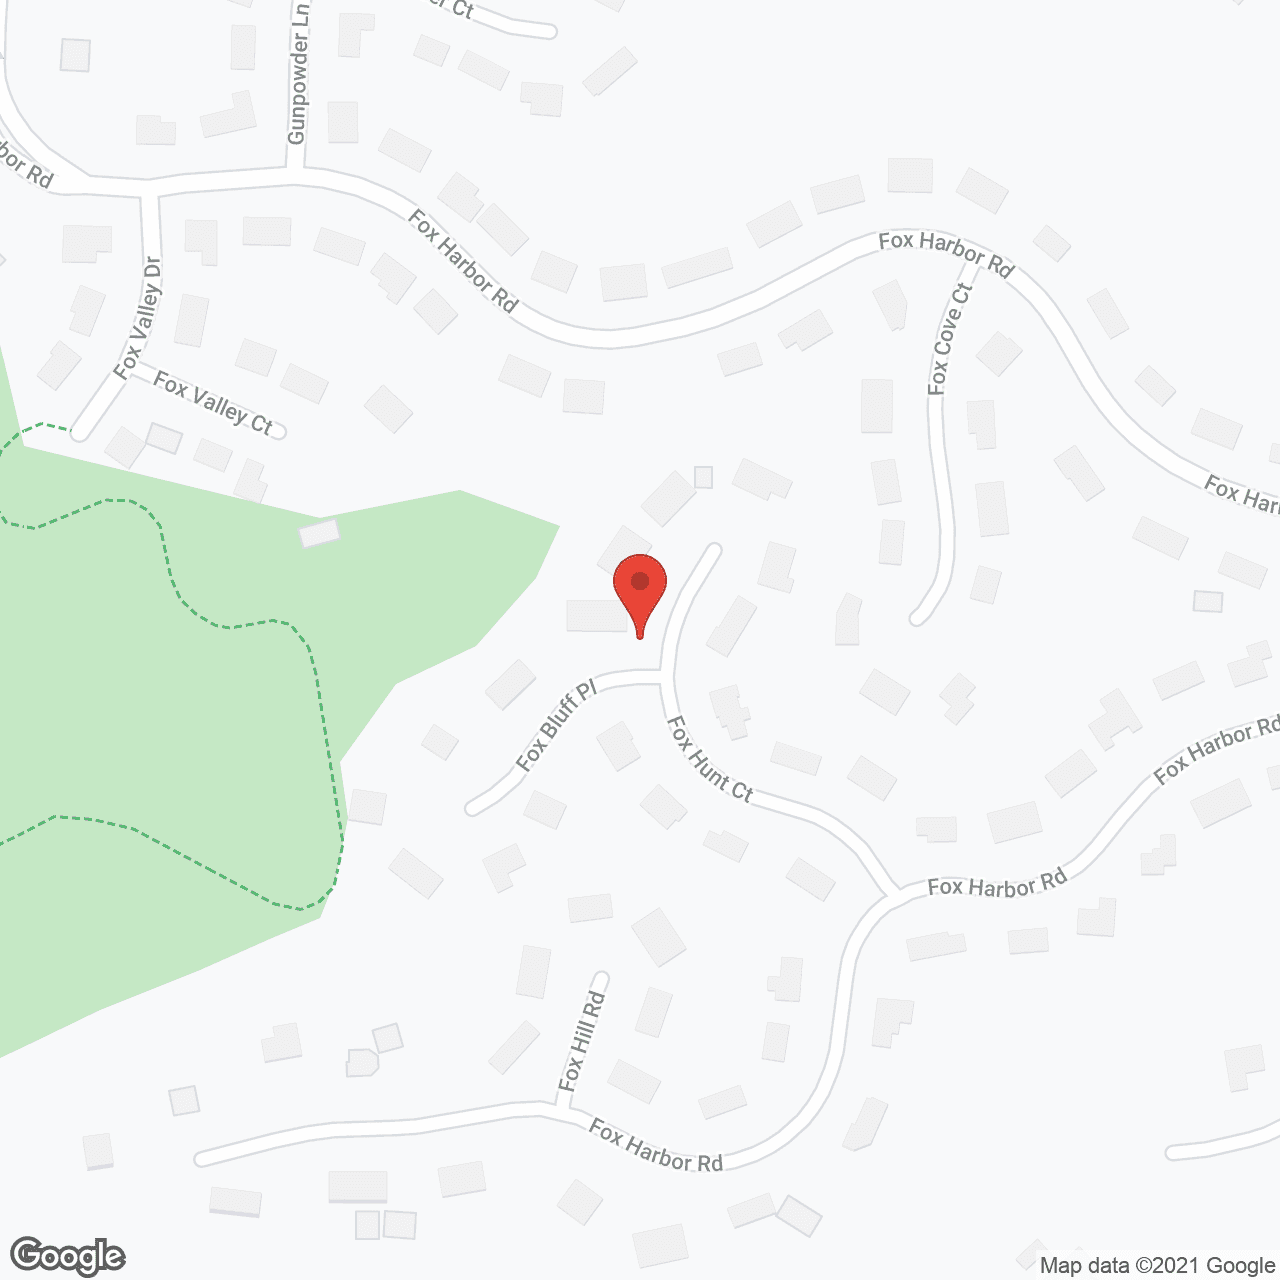 Hallmark House in google map